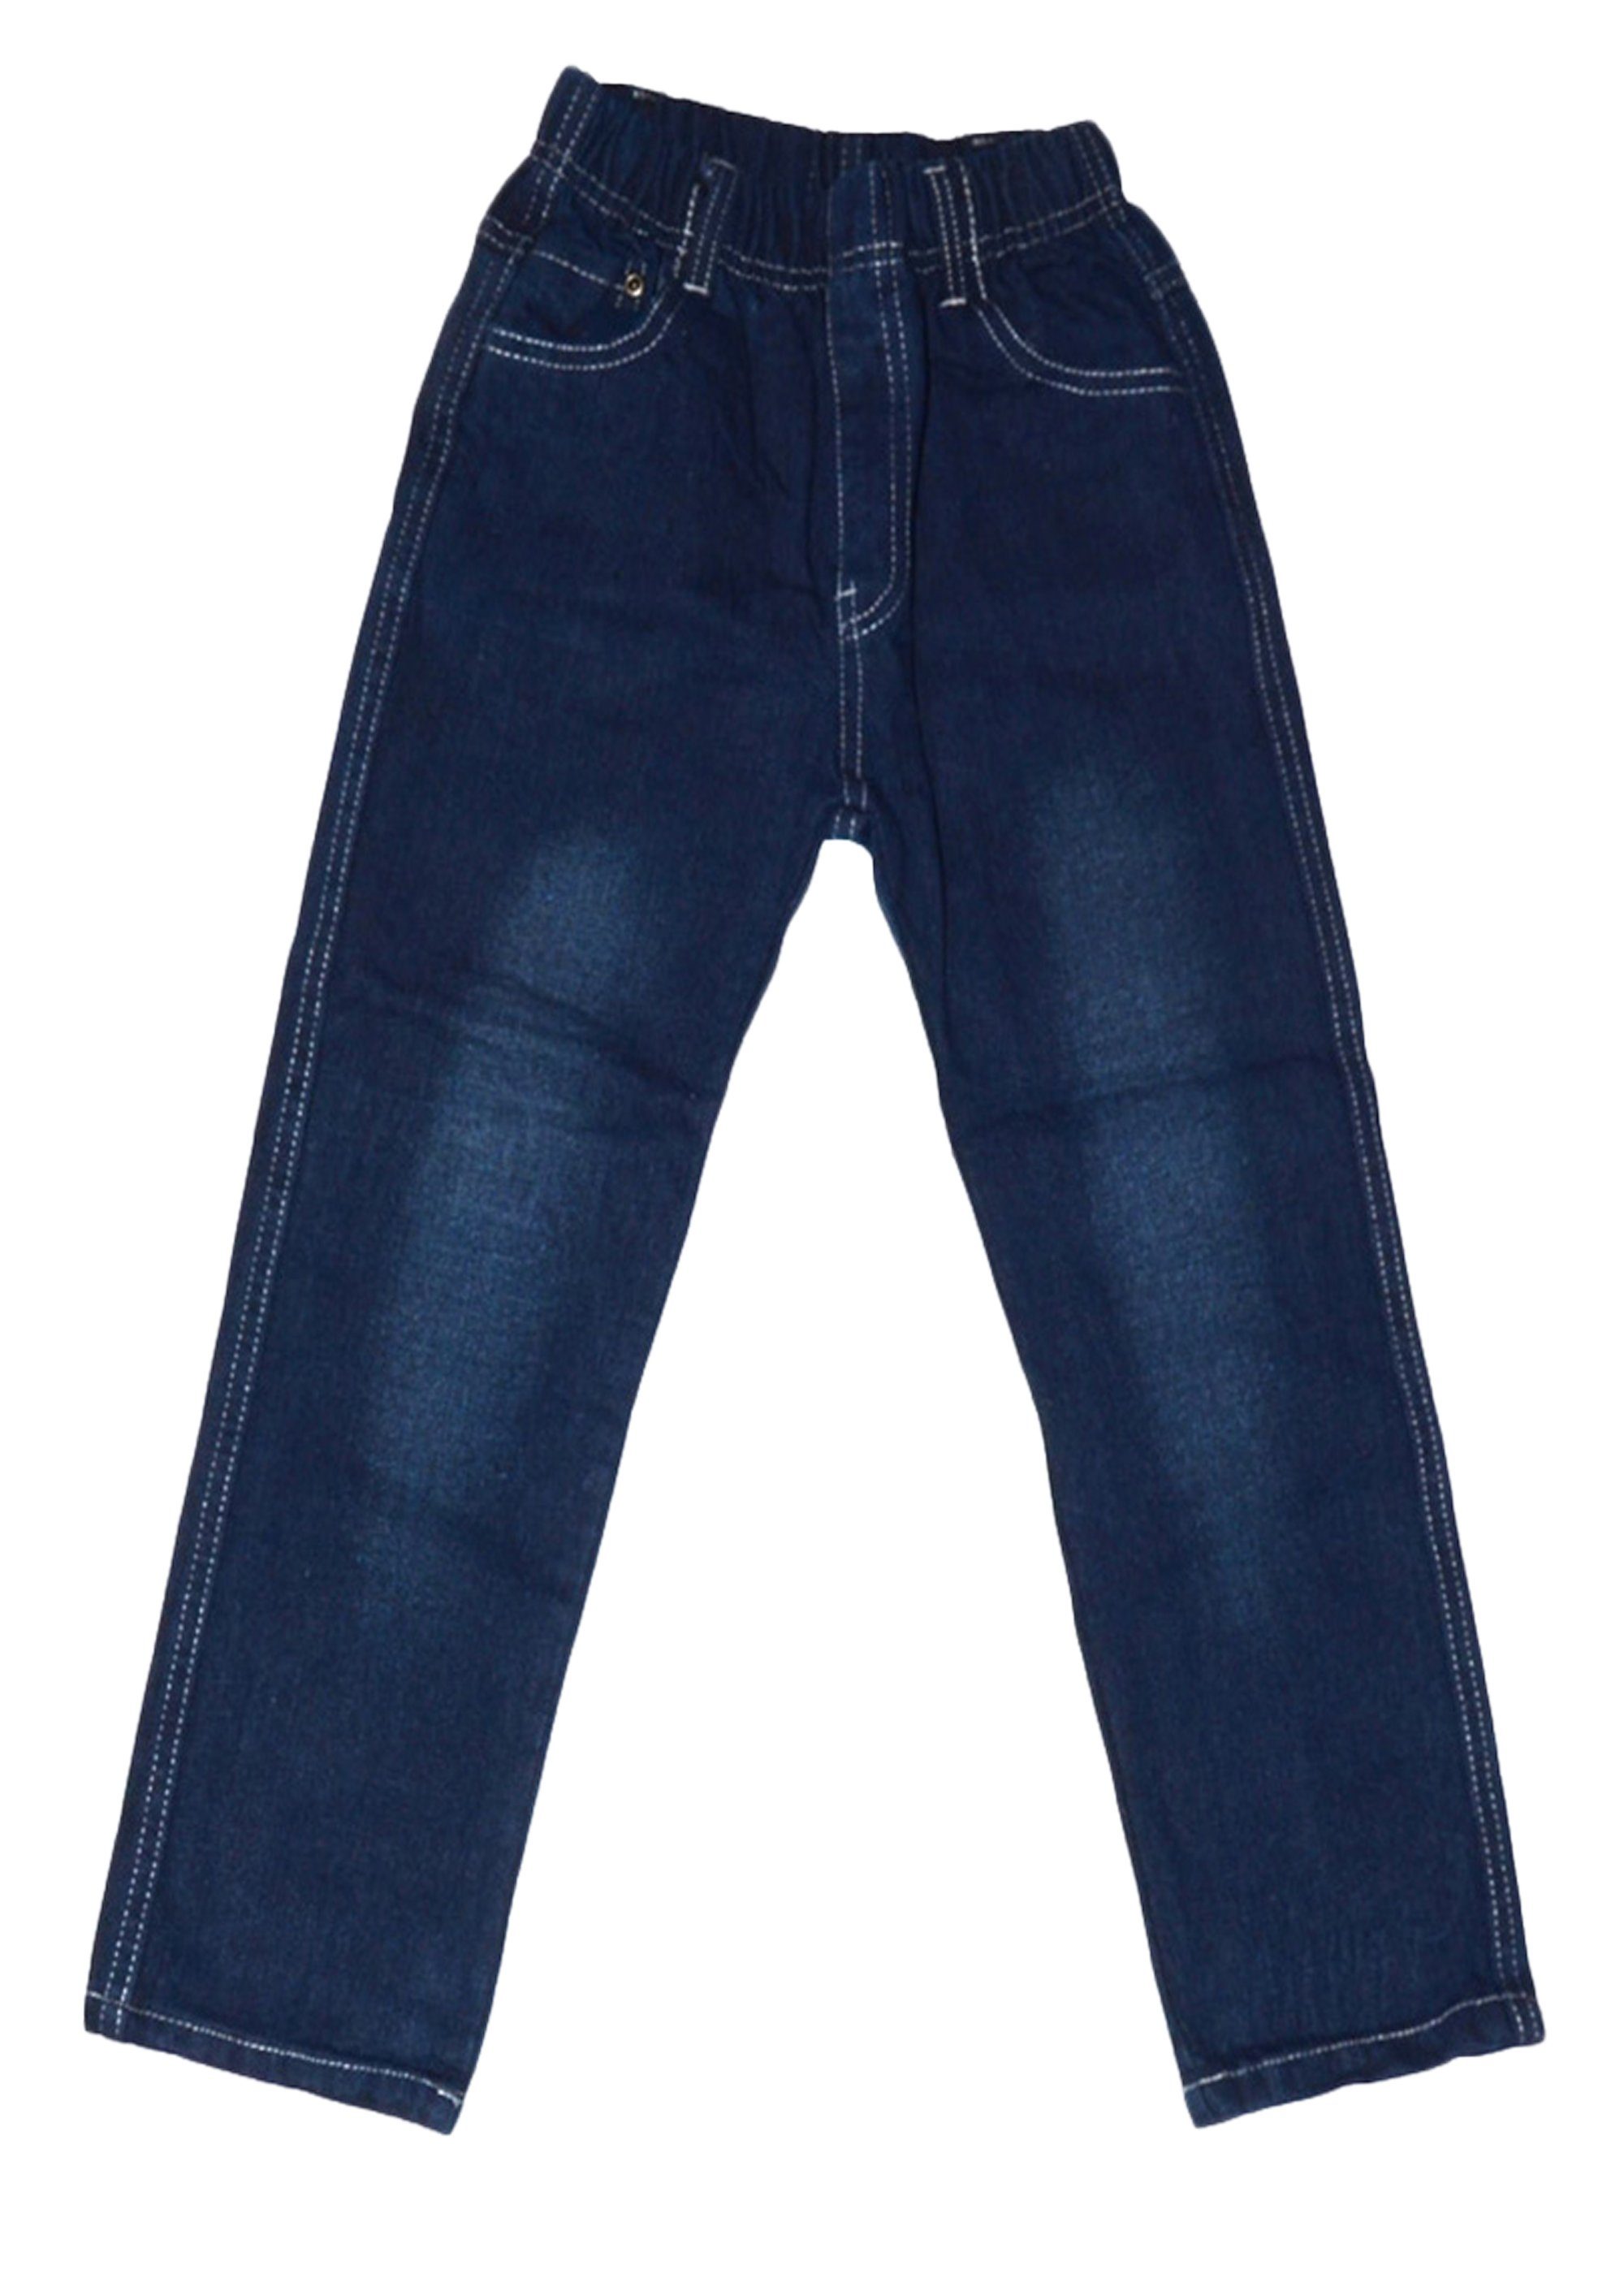 Family Bequeme Trends klassischem Design in Jeans